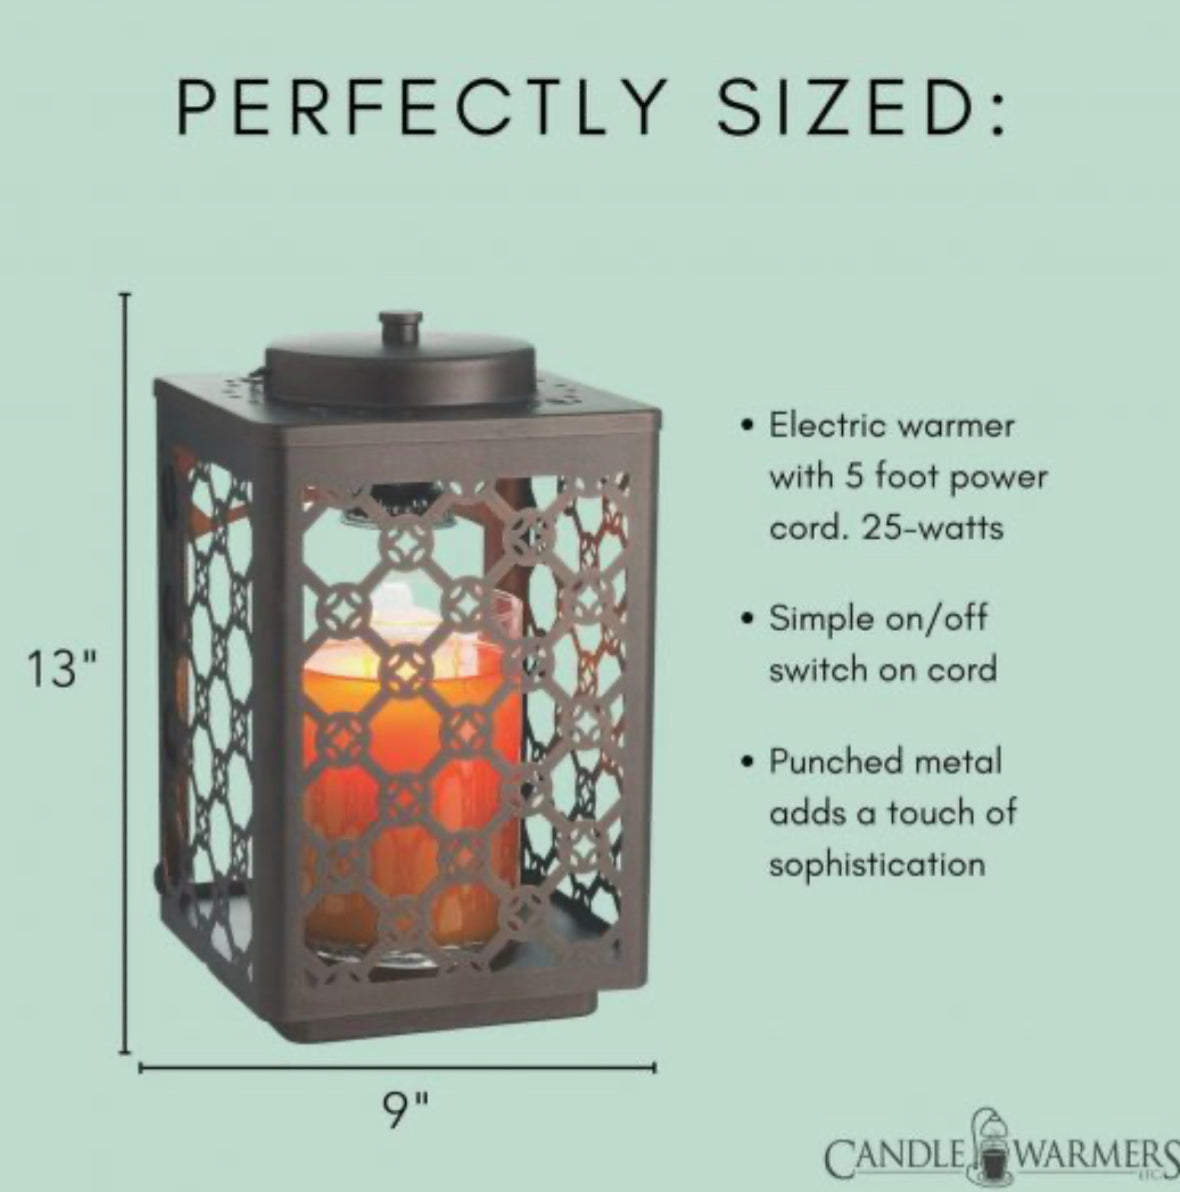 Garden Candle Warmer Lantern